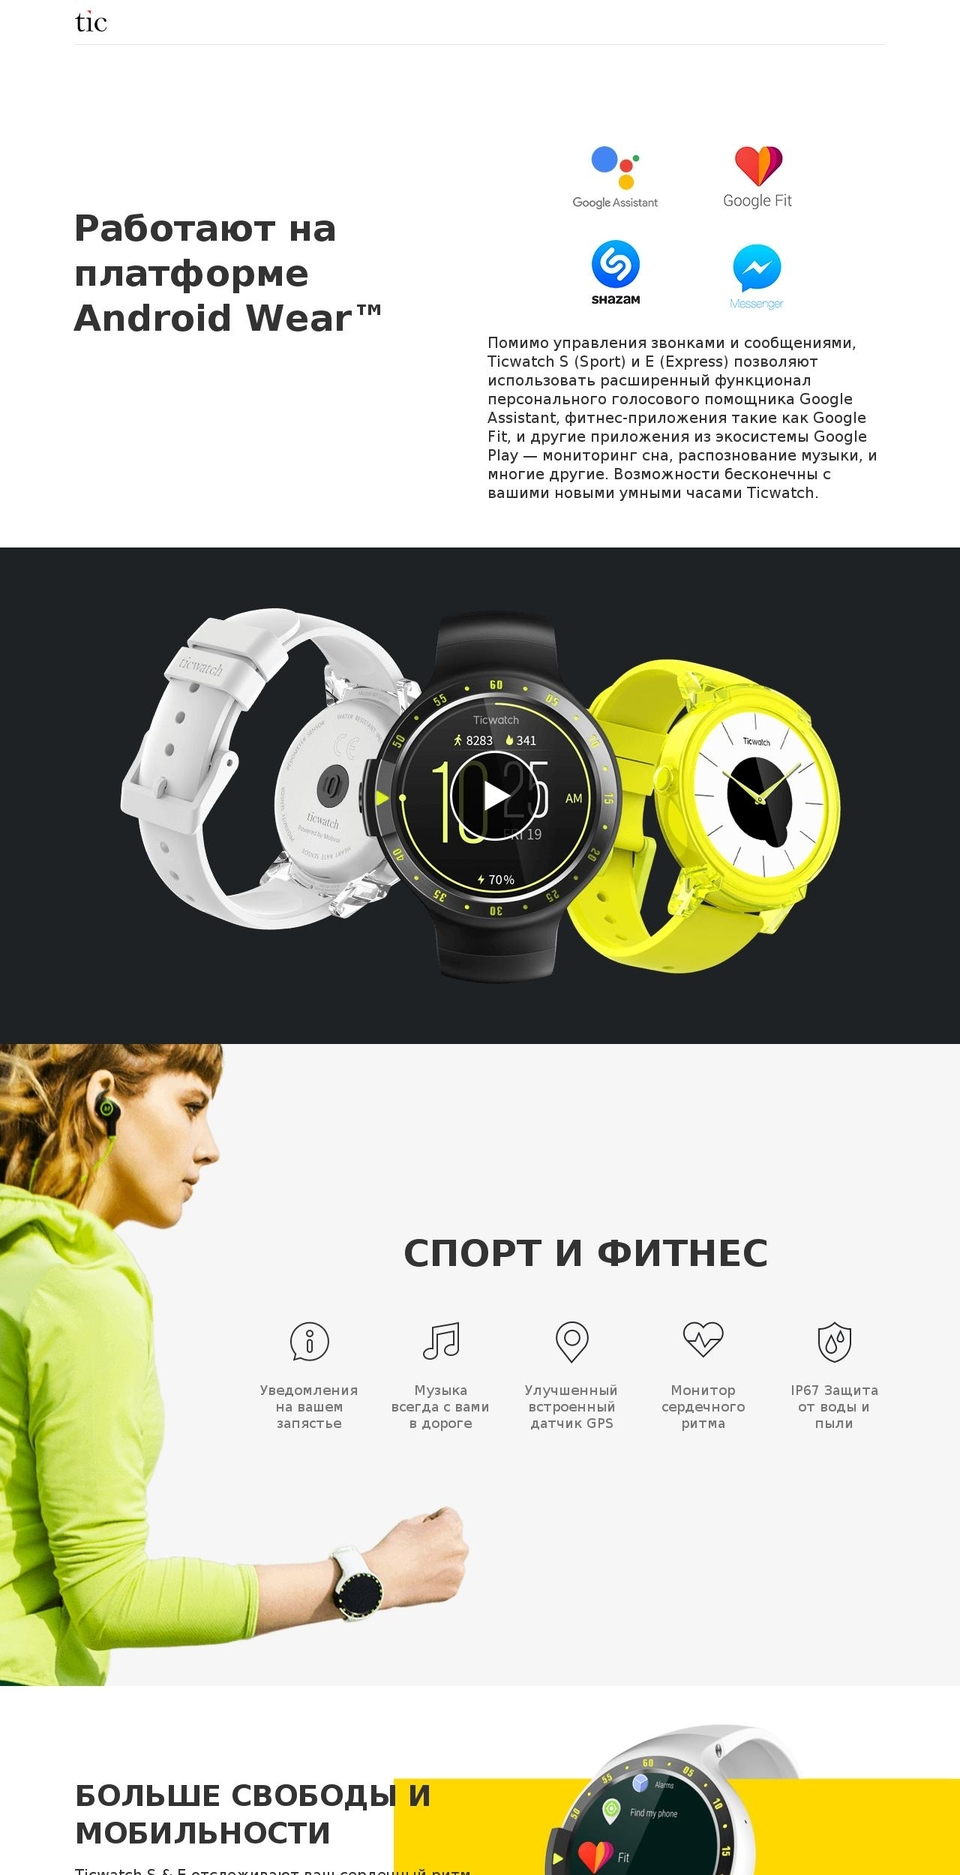 ticwatch.ru shopify website screenshot